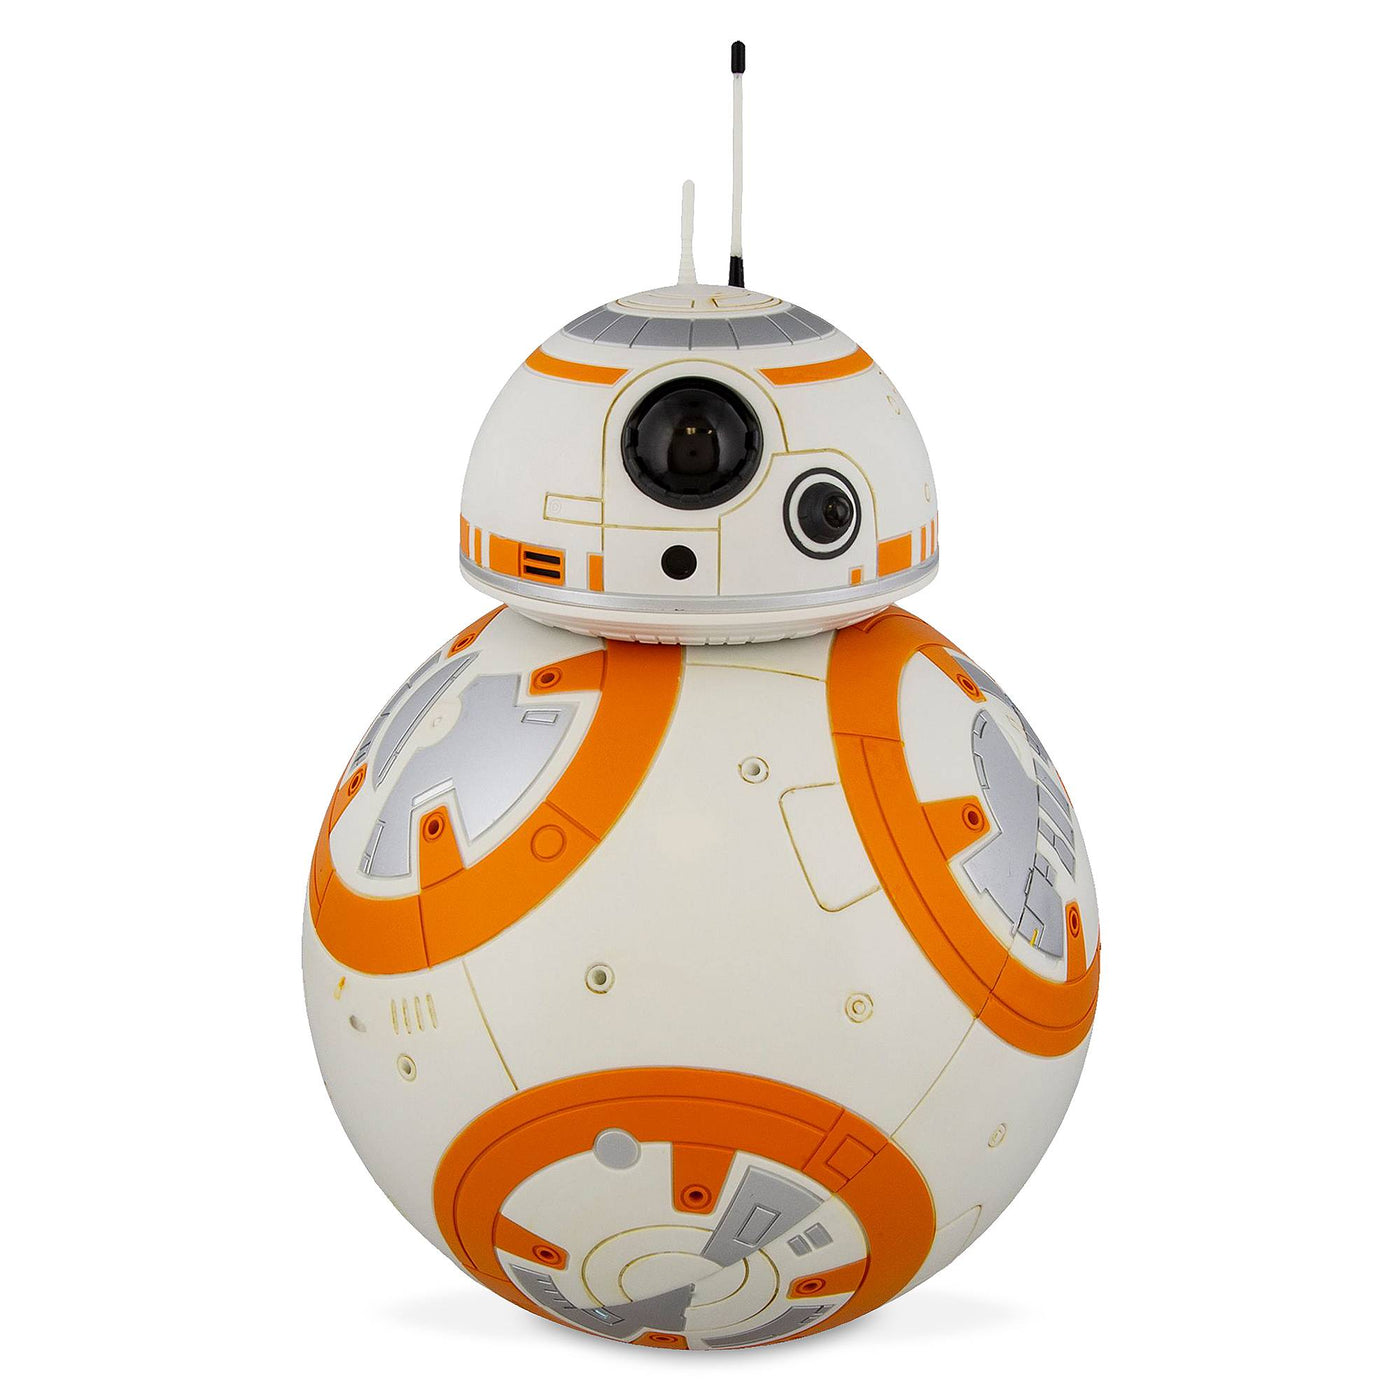 Disney BB-8 Interactive Remote Control Droid Depot Star Wars Galaxy’s Edge New